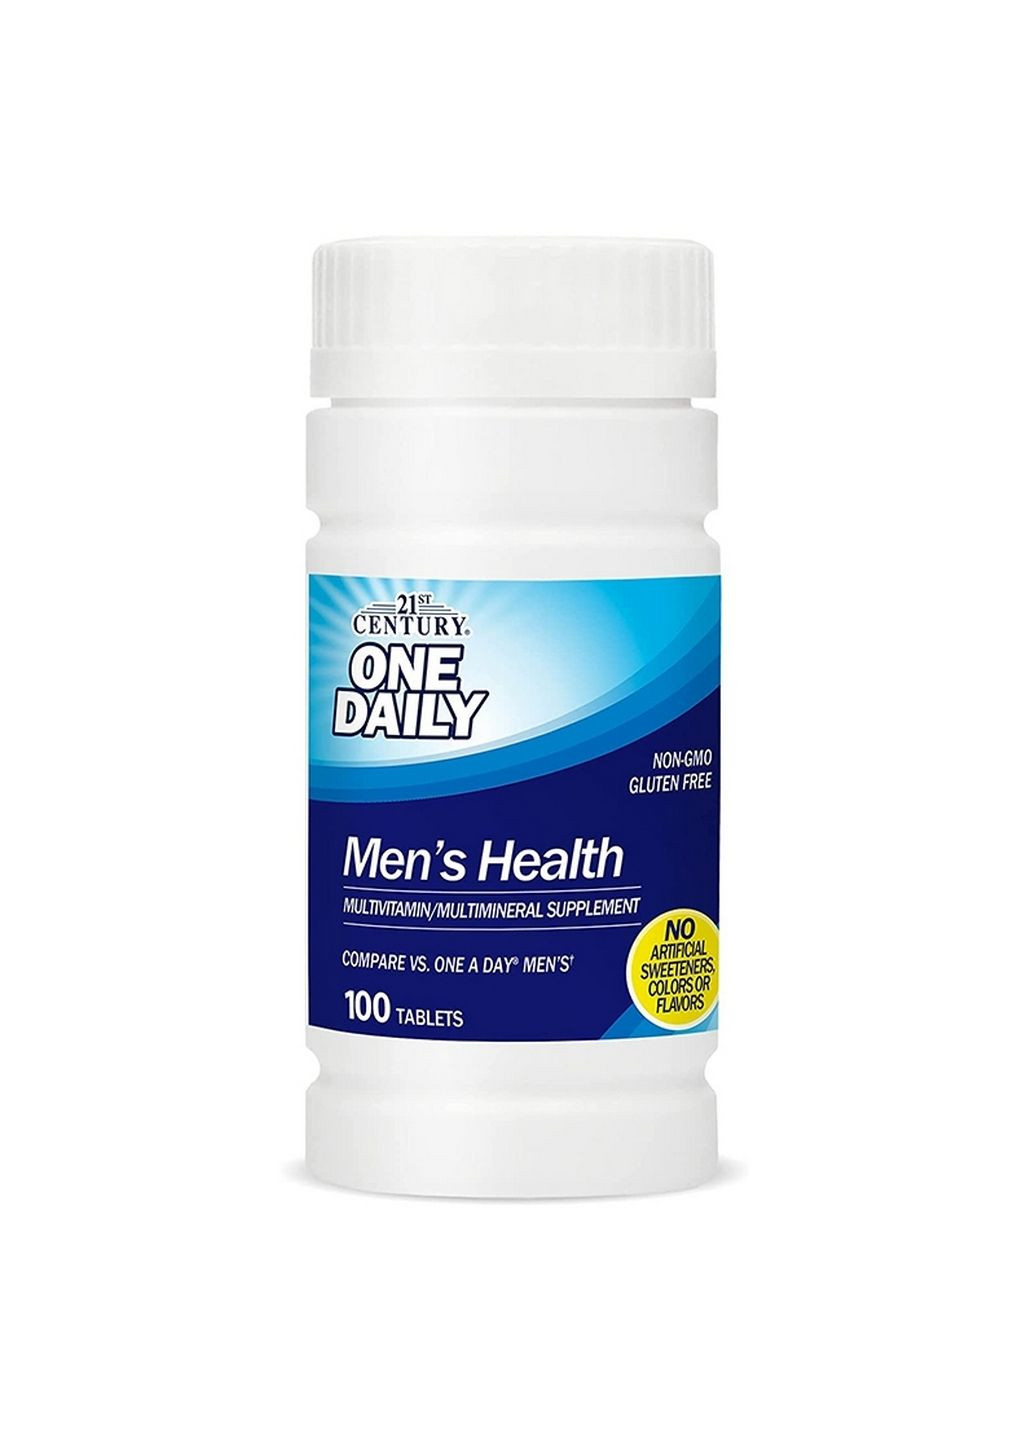 Витамины и минералы One Daily Men's Health, 100 таблеток 21st Century (293477339)